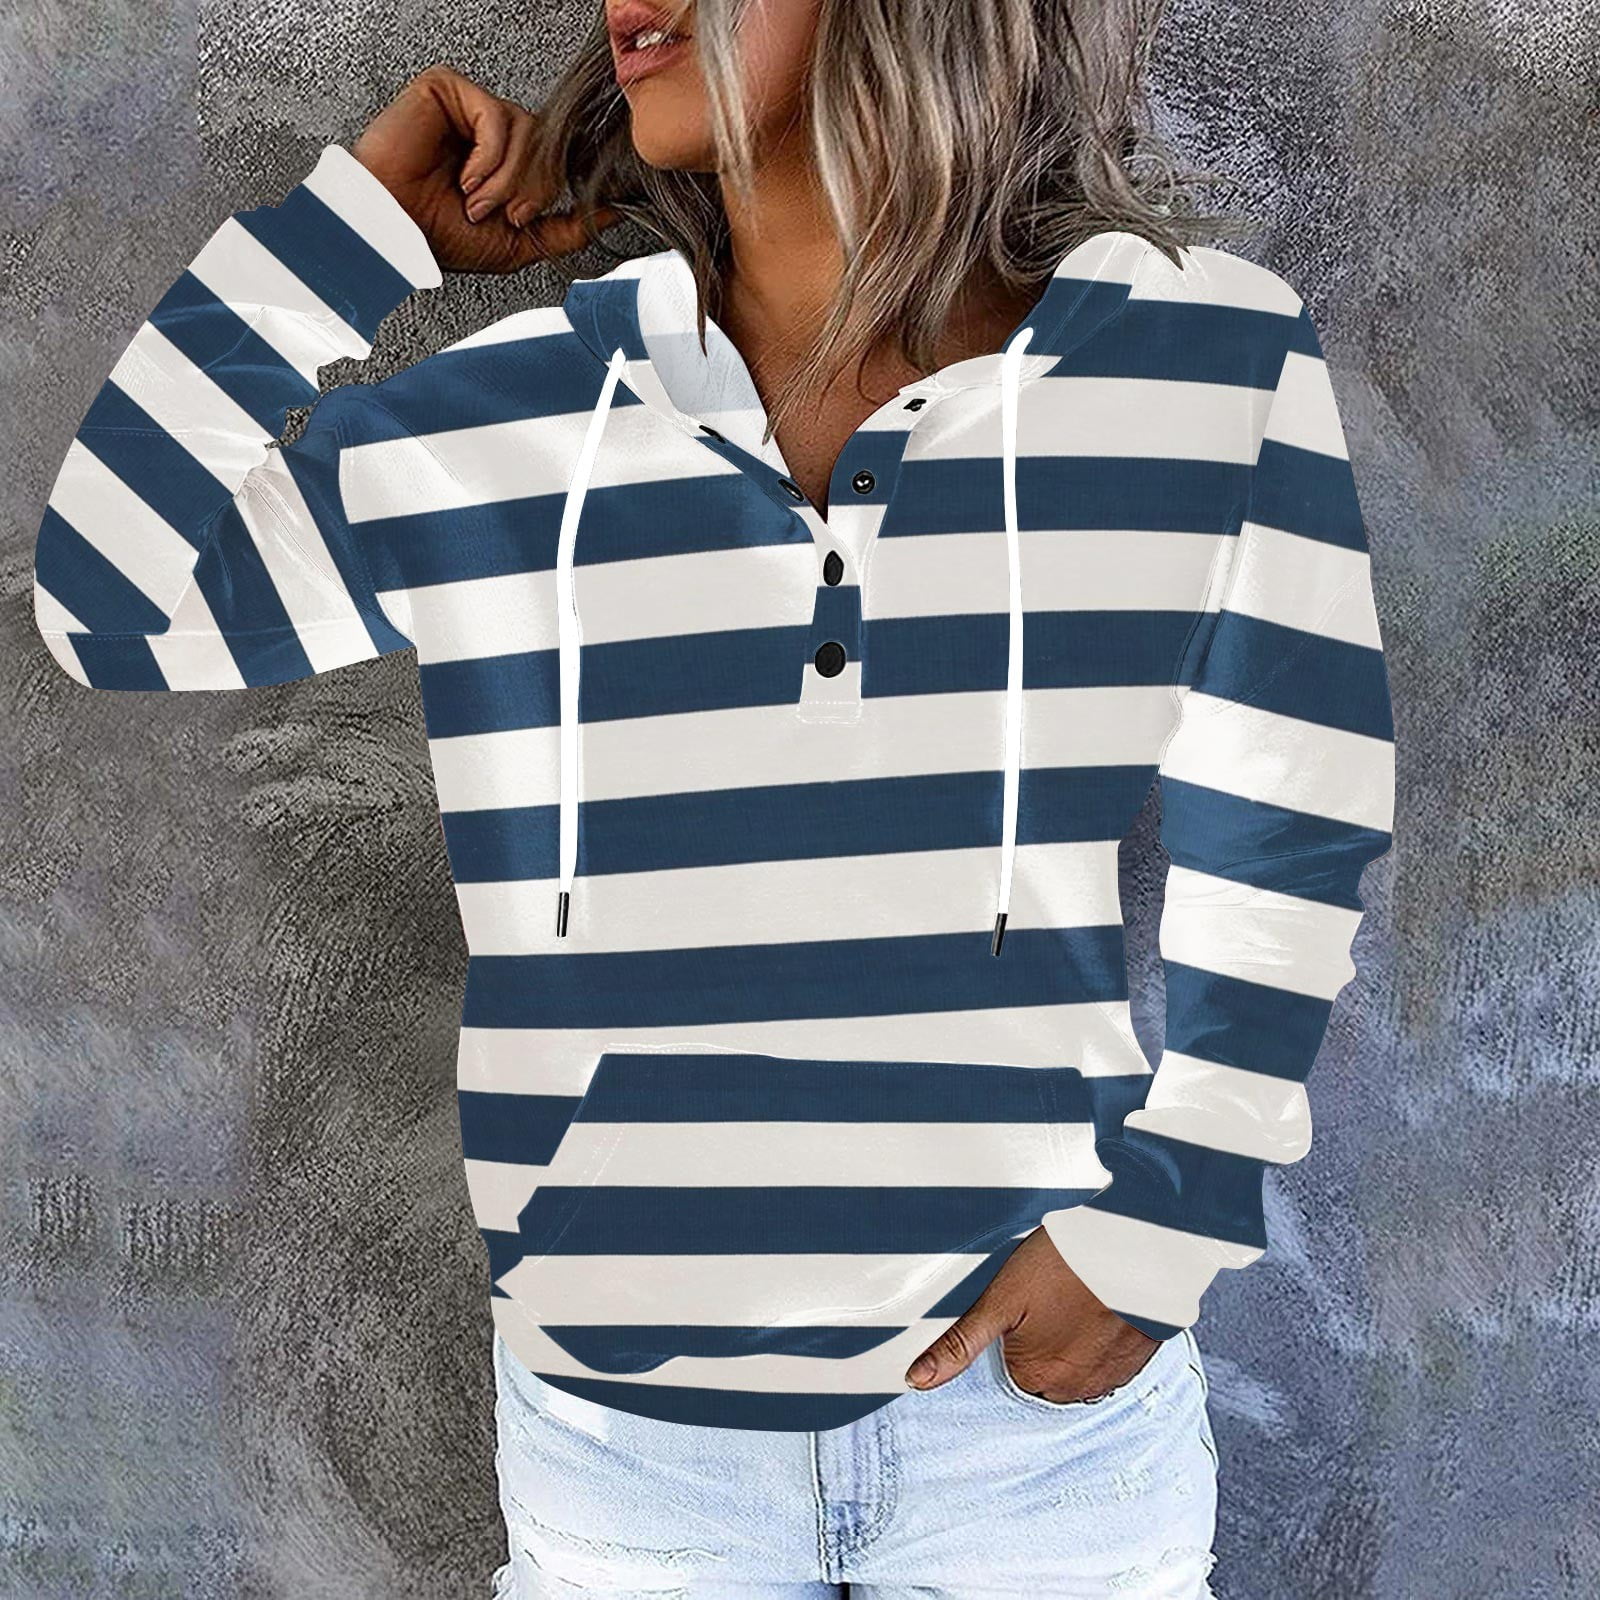 Fashion Tops Blouse Tops H&M Blouse Top blue-white striped pattern elegant 